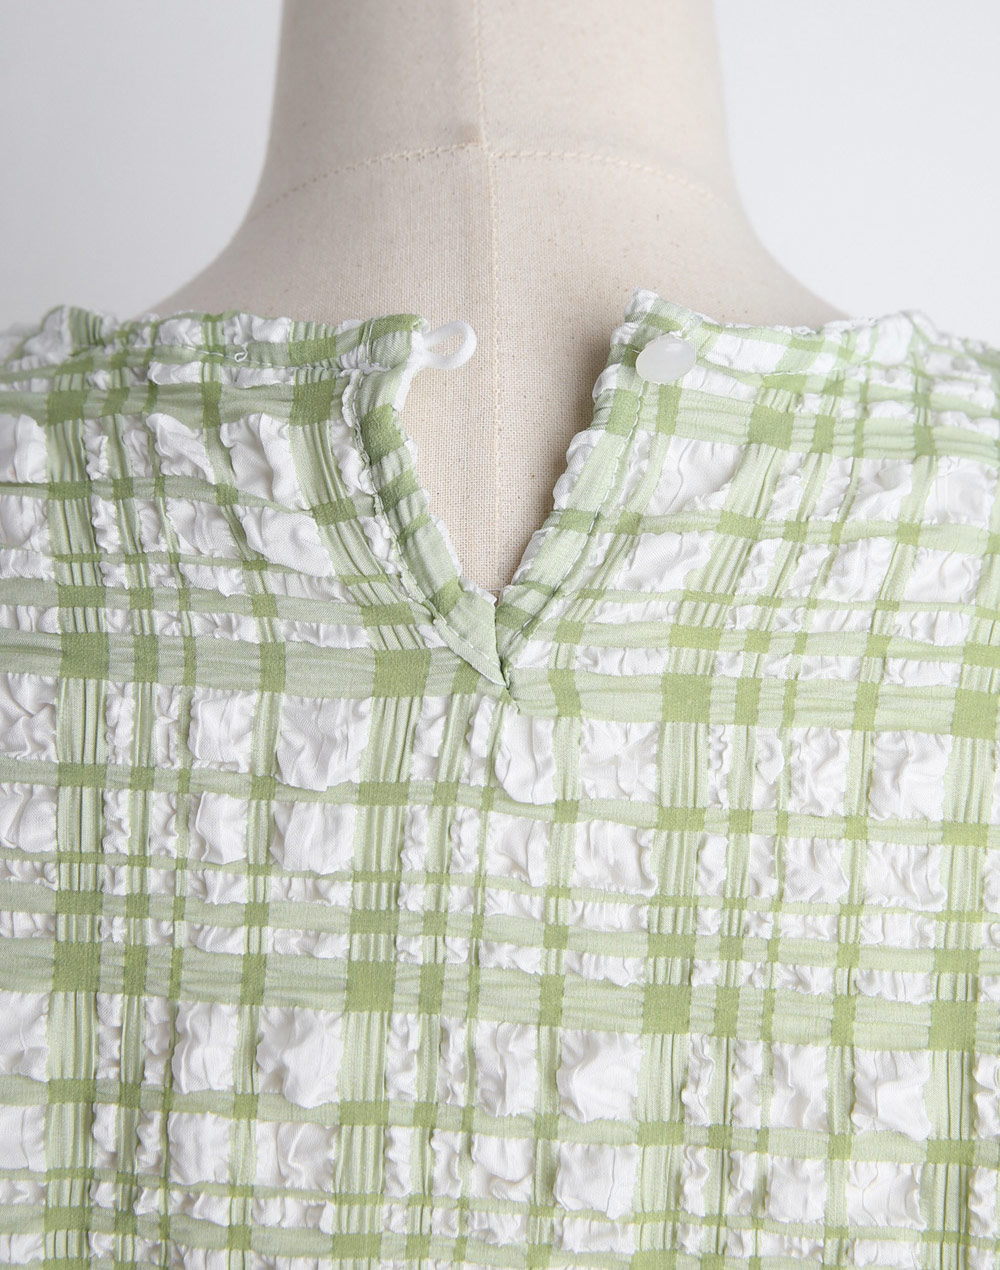 Ponpon blouse・b280578（ブラウス/ブラウス）| rirry_71 | 東京ガールズマーケット